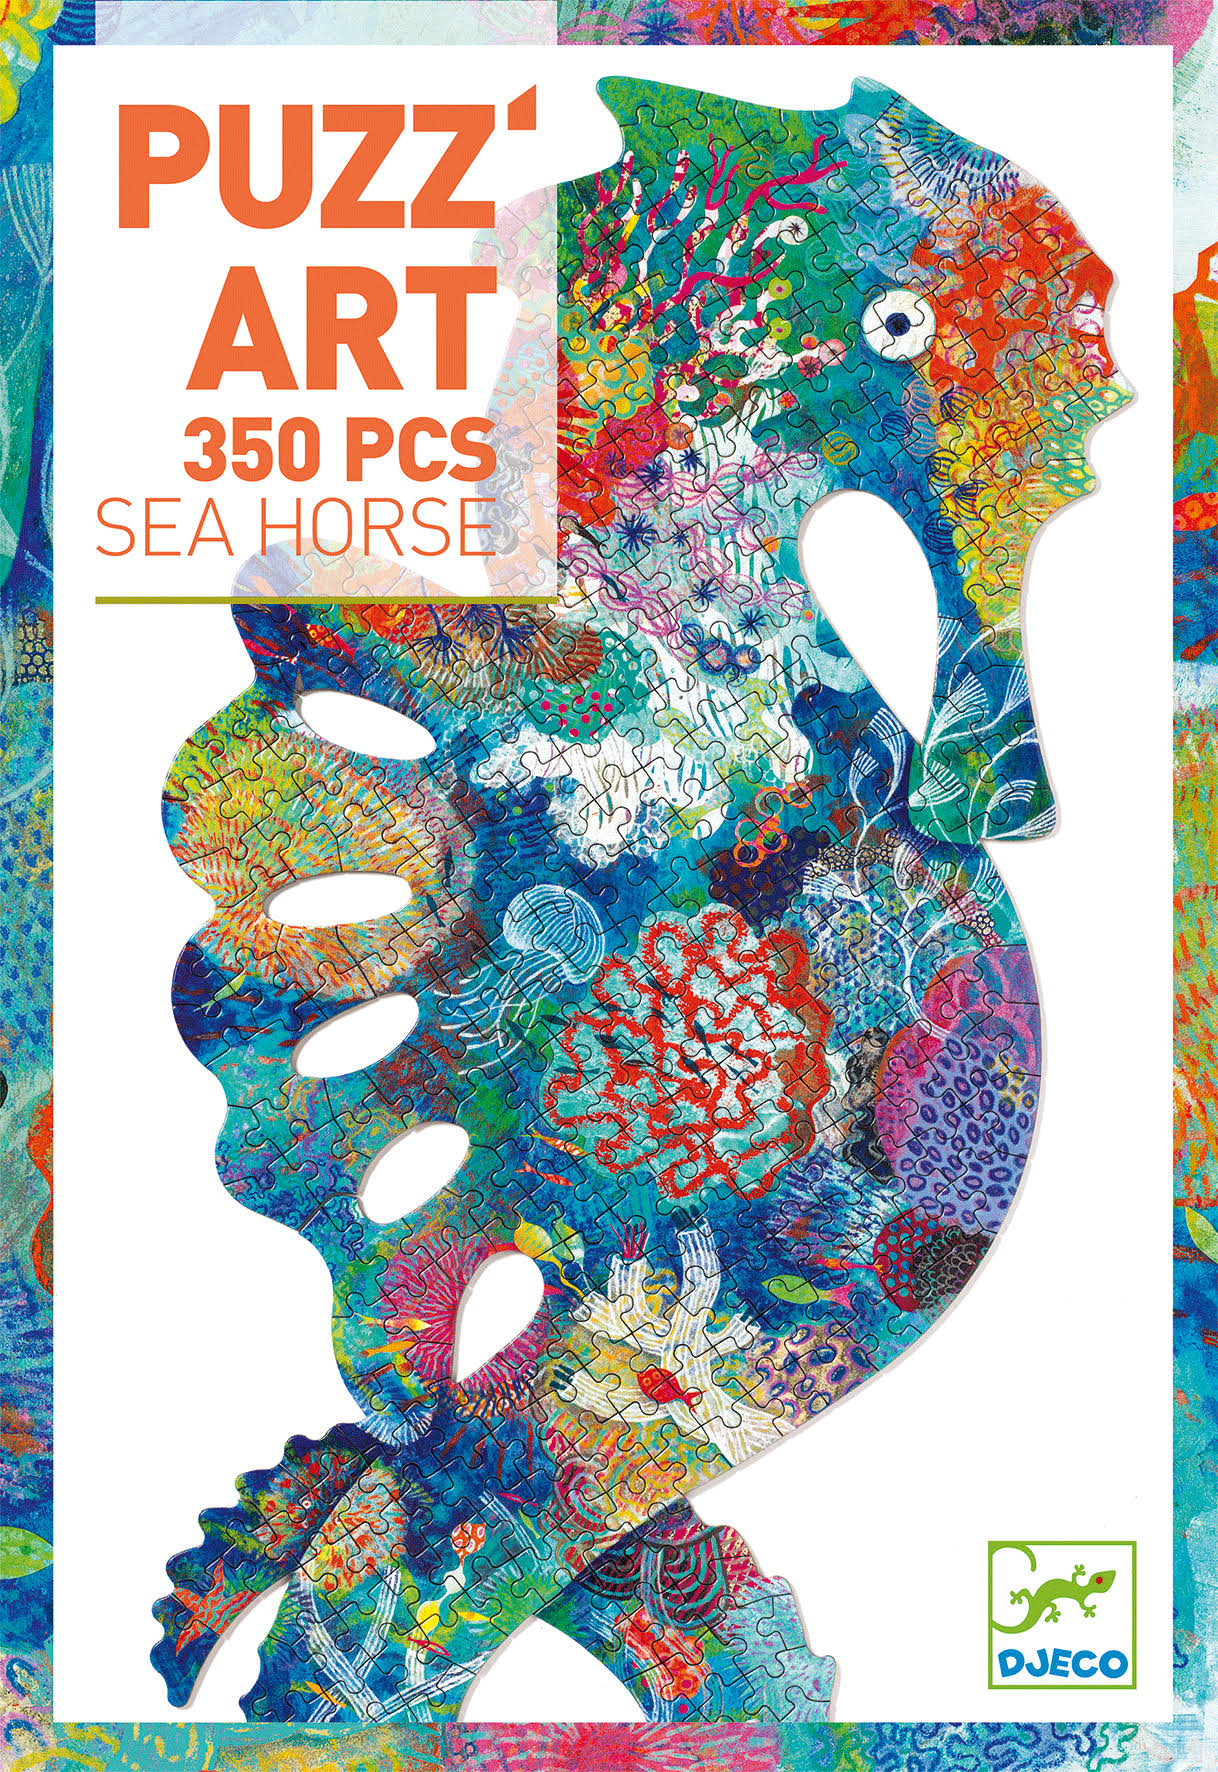 Djeco Jigsaw Puzzle - Puzz'Art Sea Horse, 350 Pieces